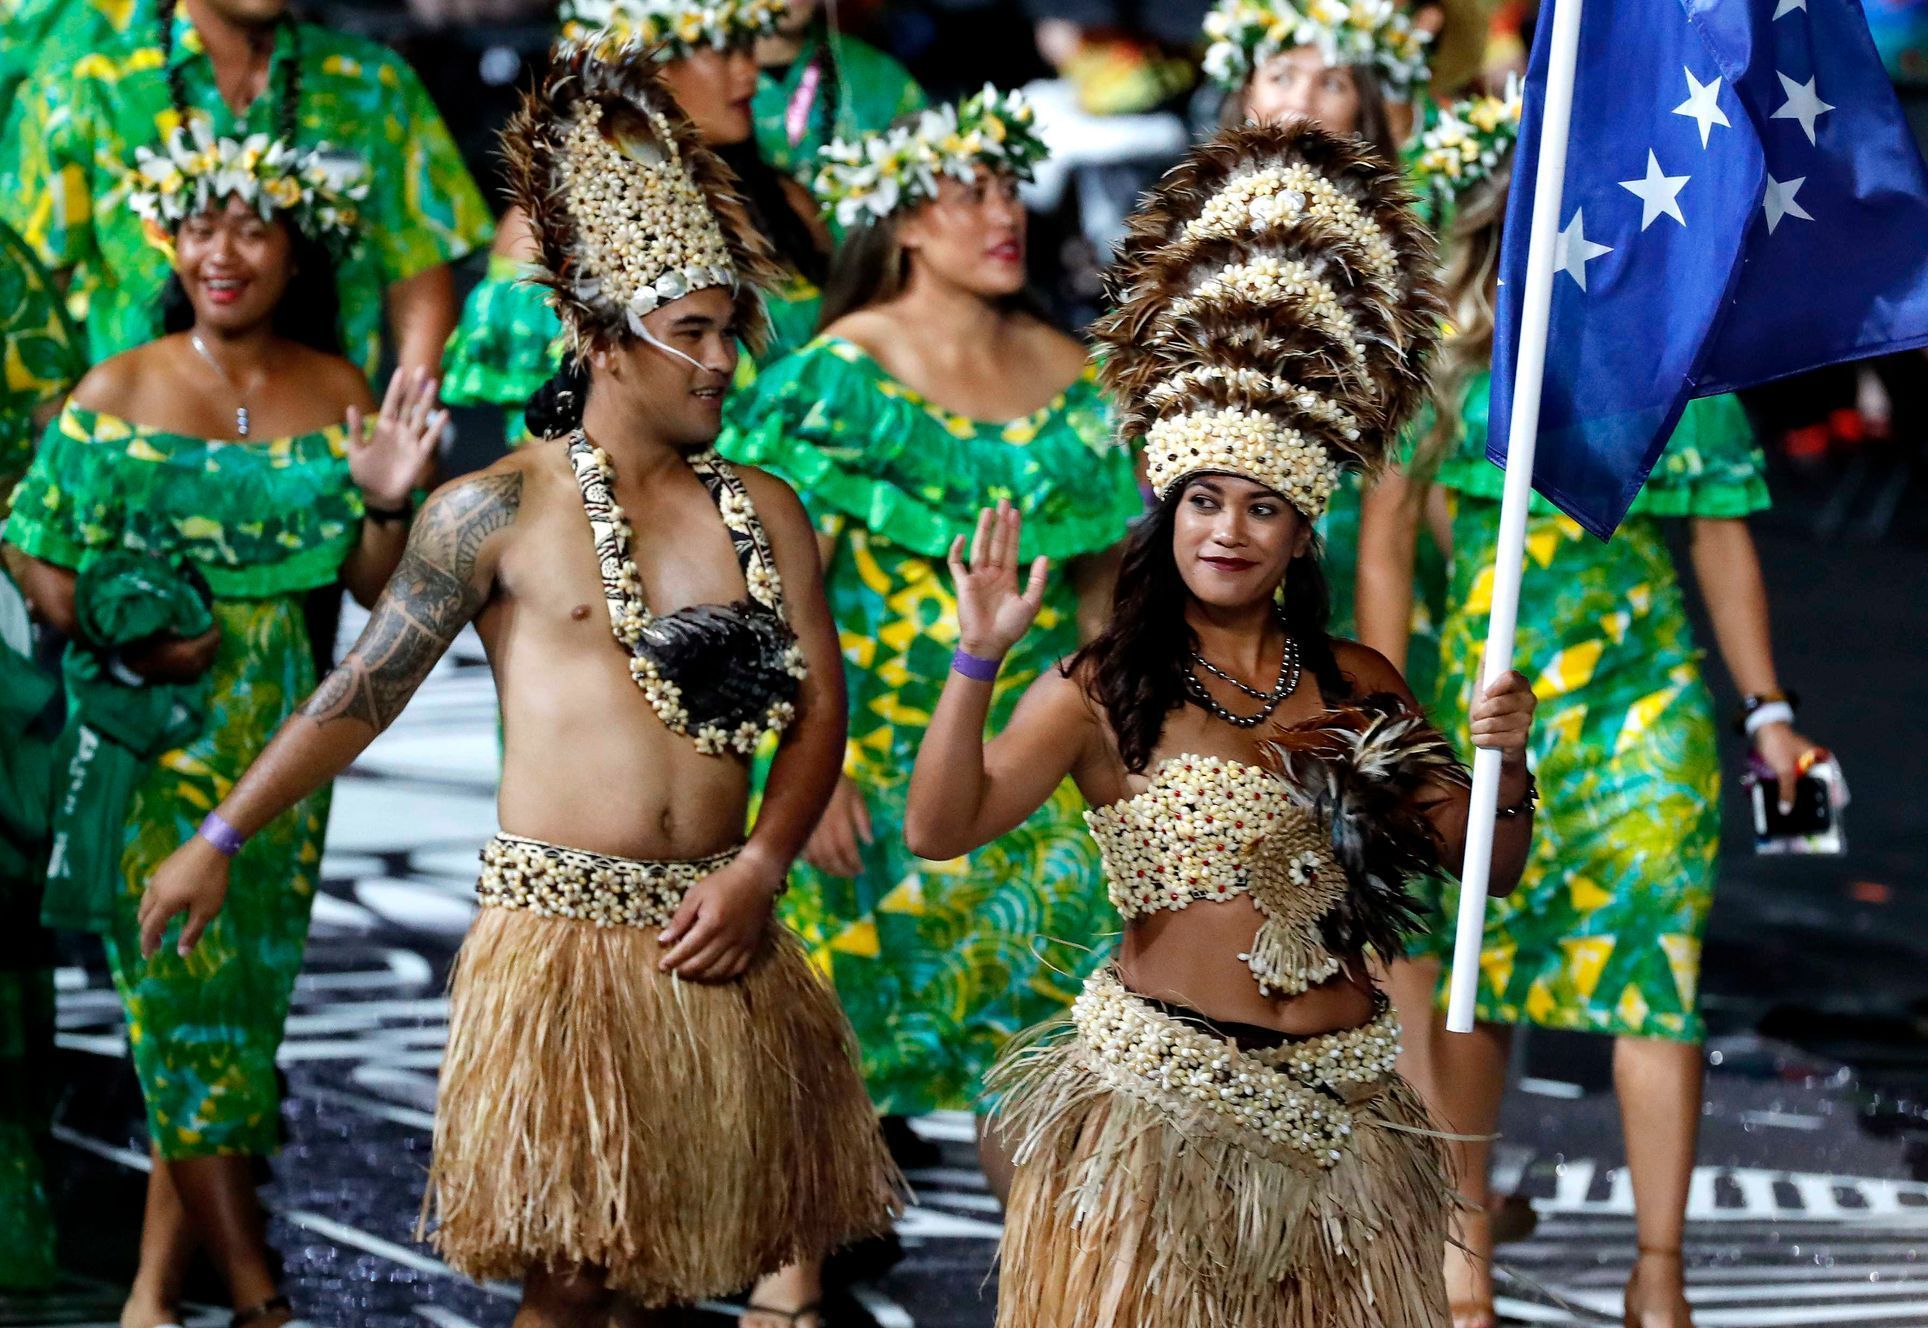 Výprav Cookových ostrovů na hrách Commonwealthu 2018